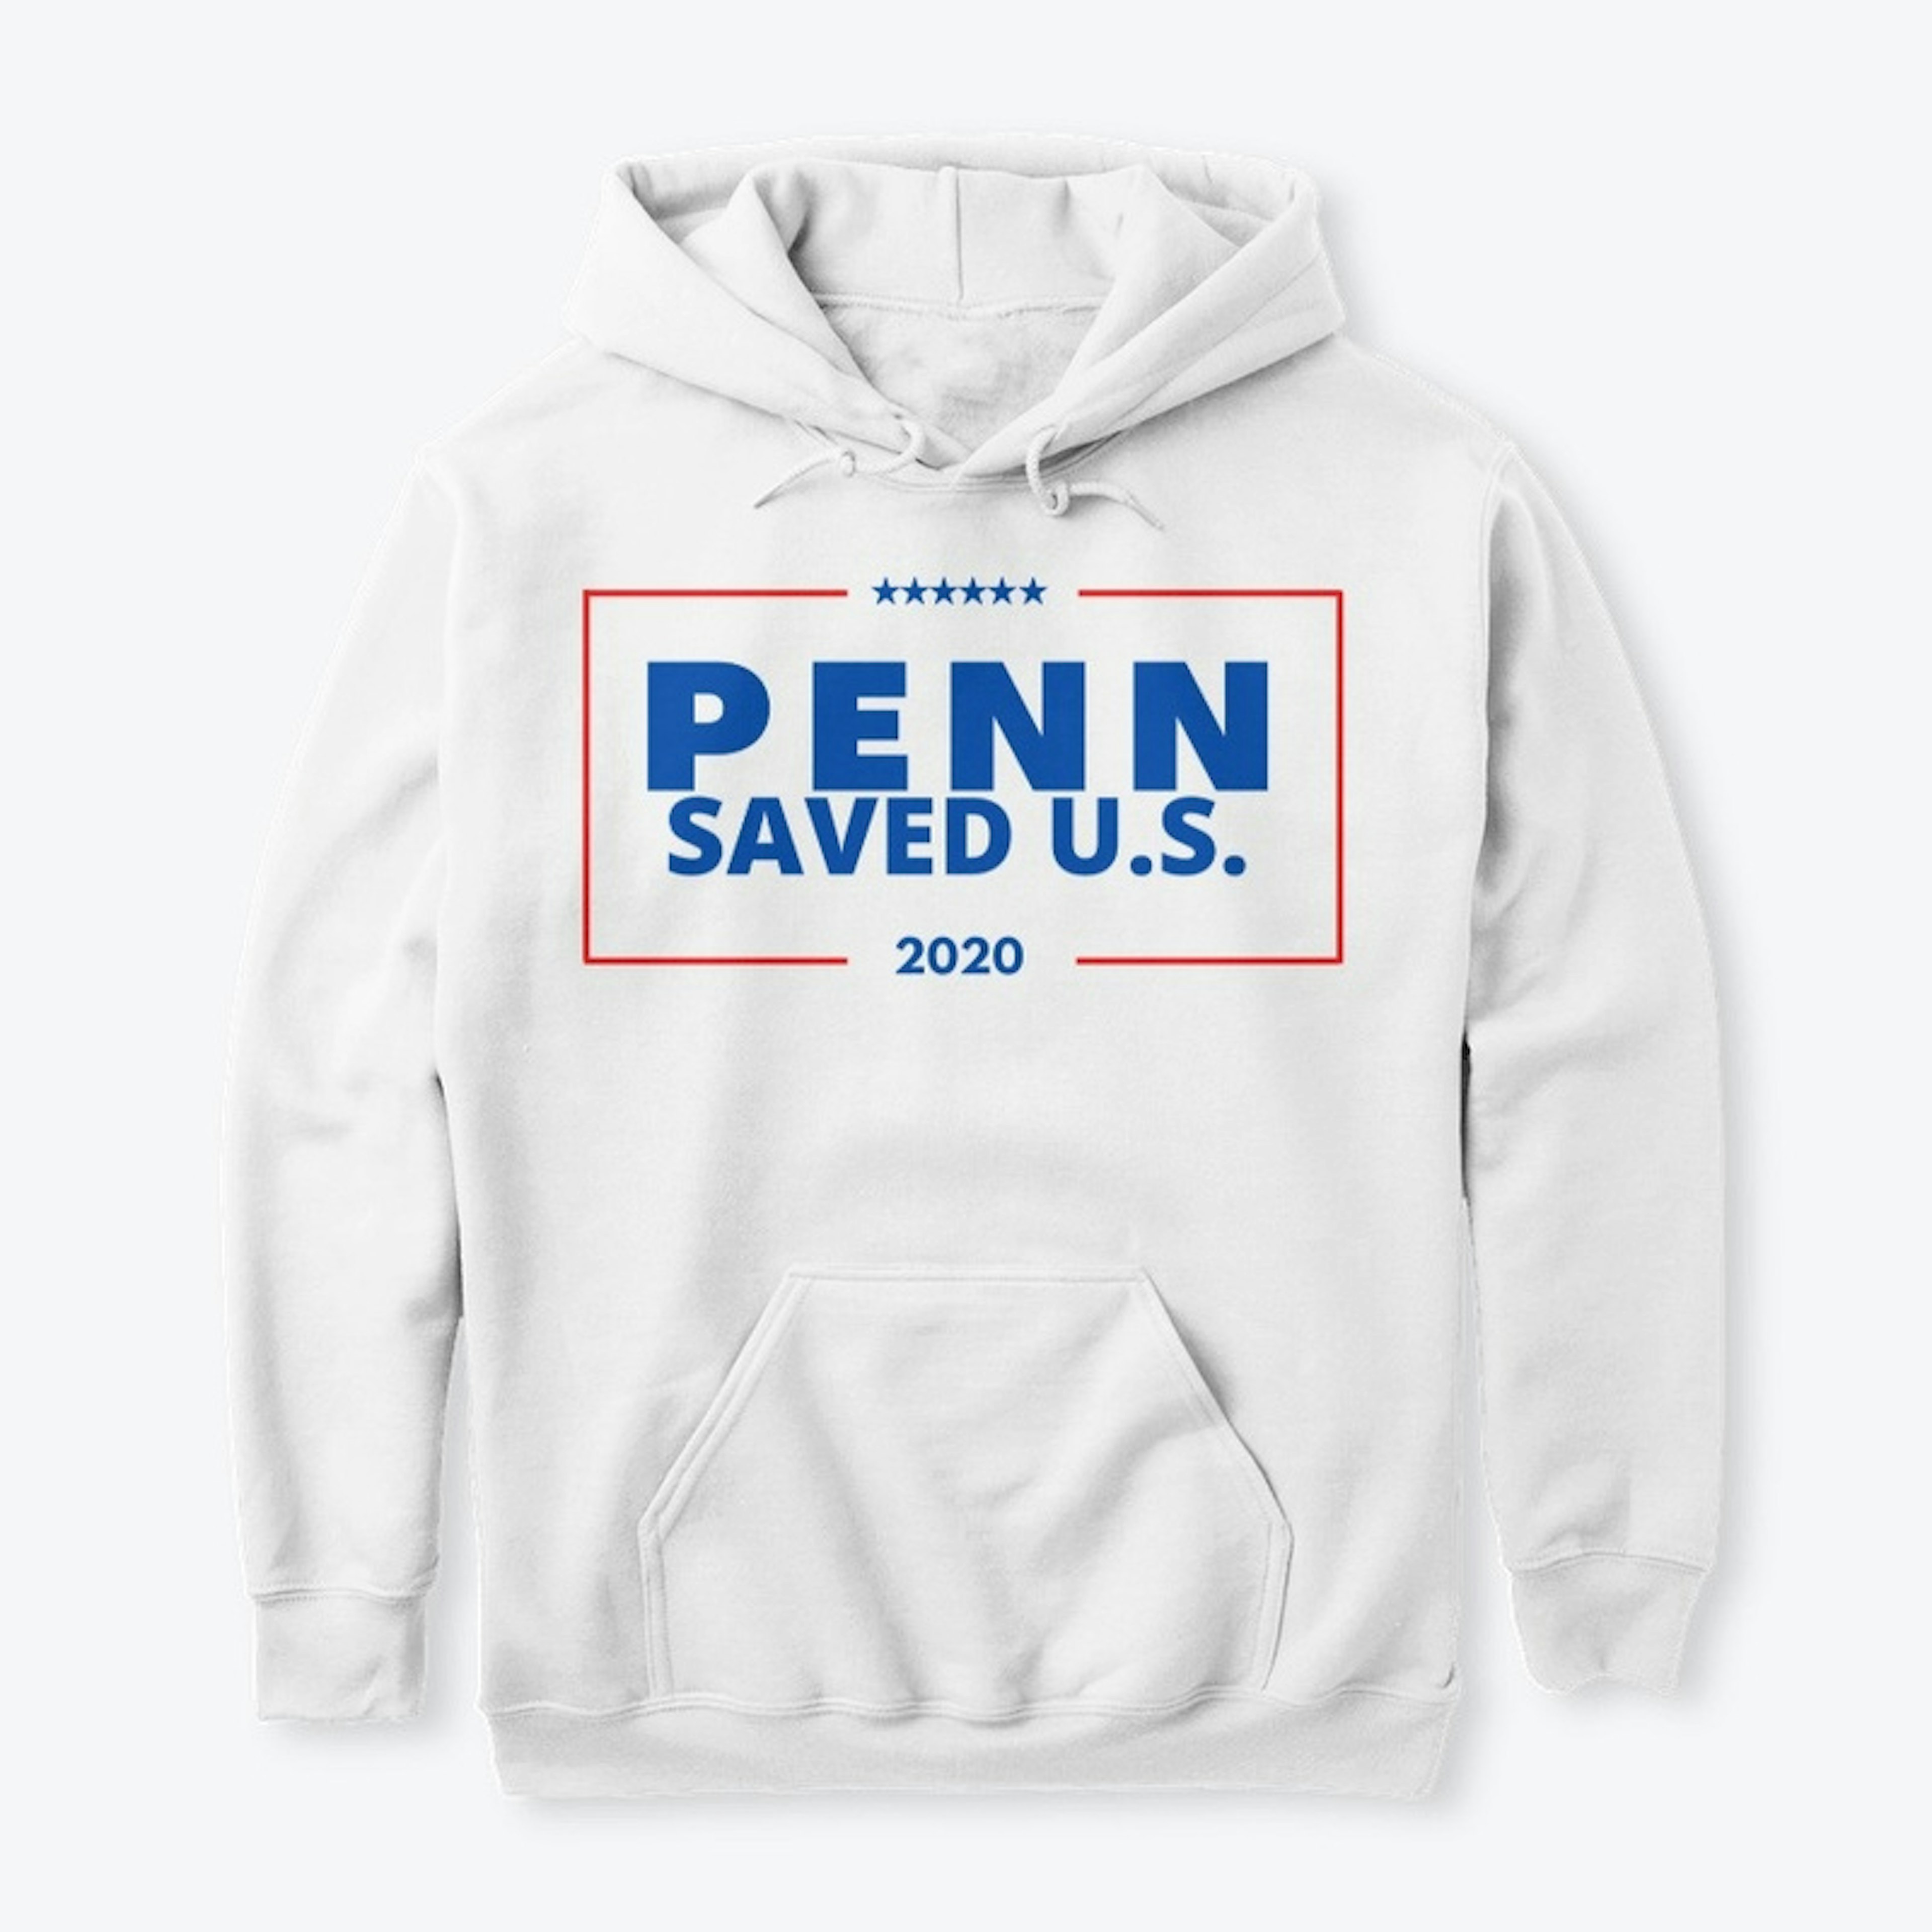 Penn Saved U.S. (White)